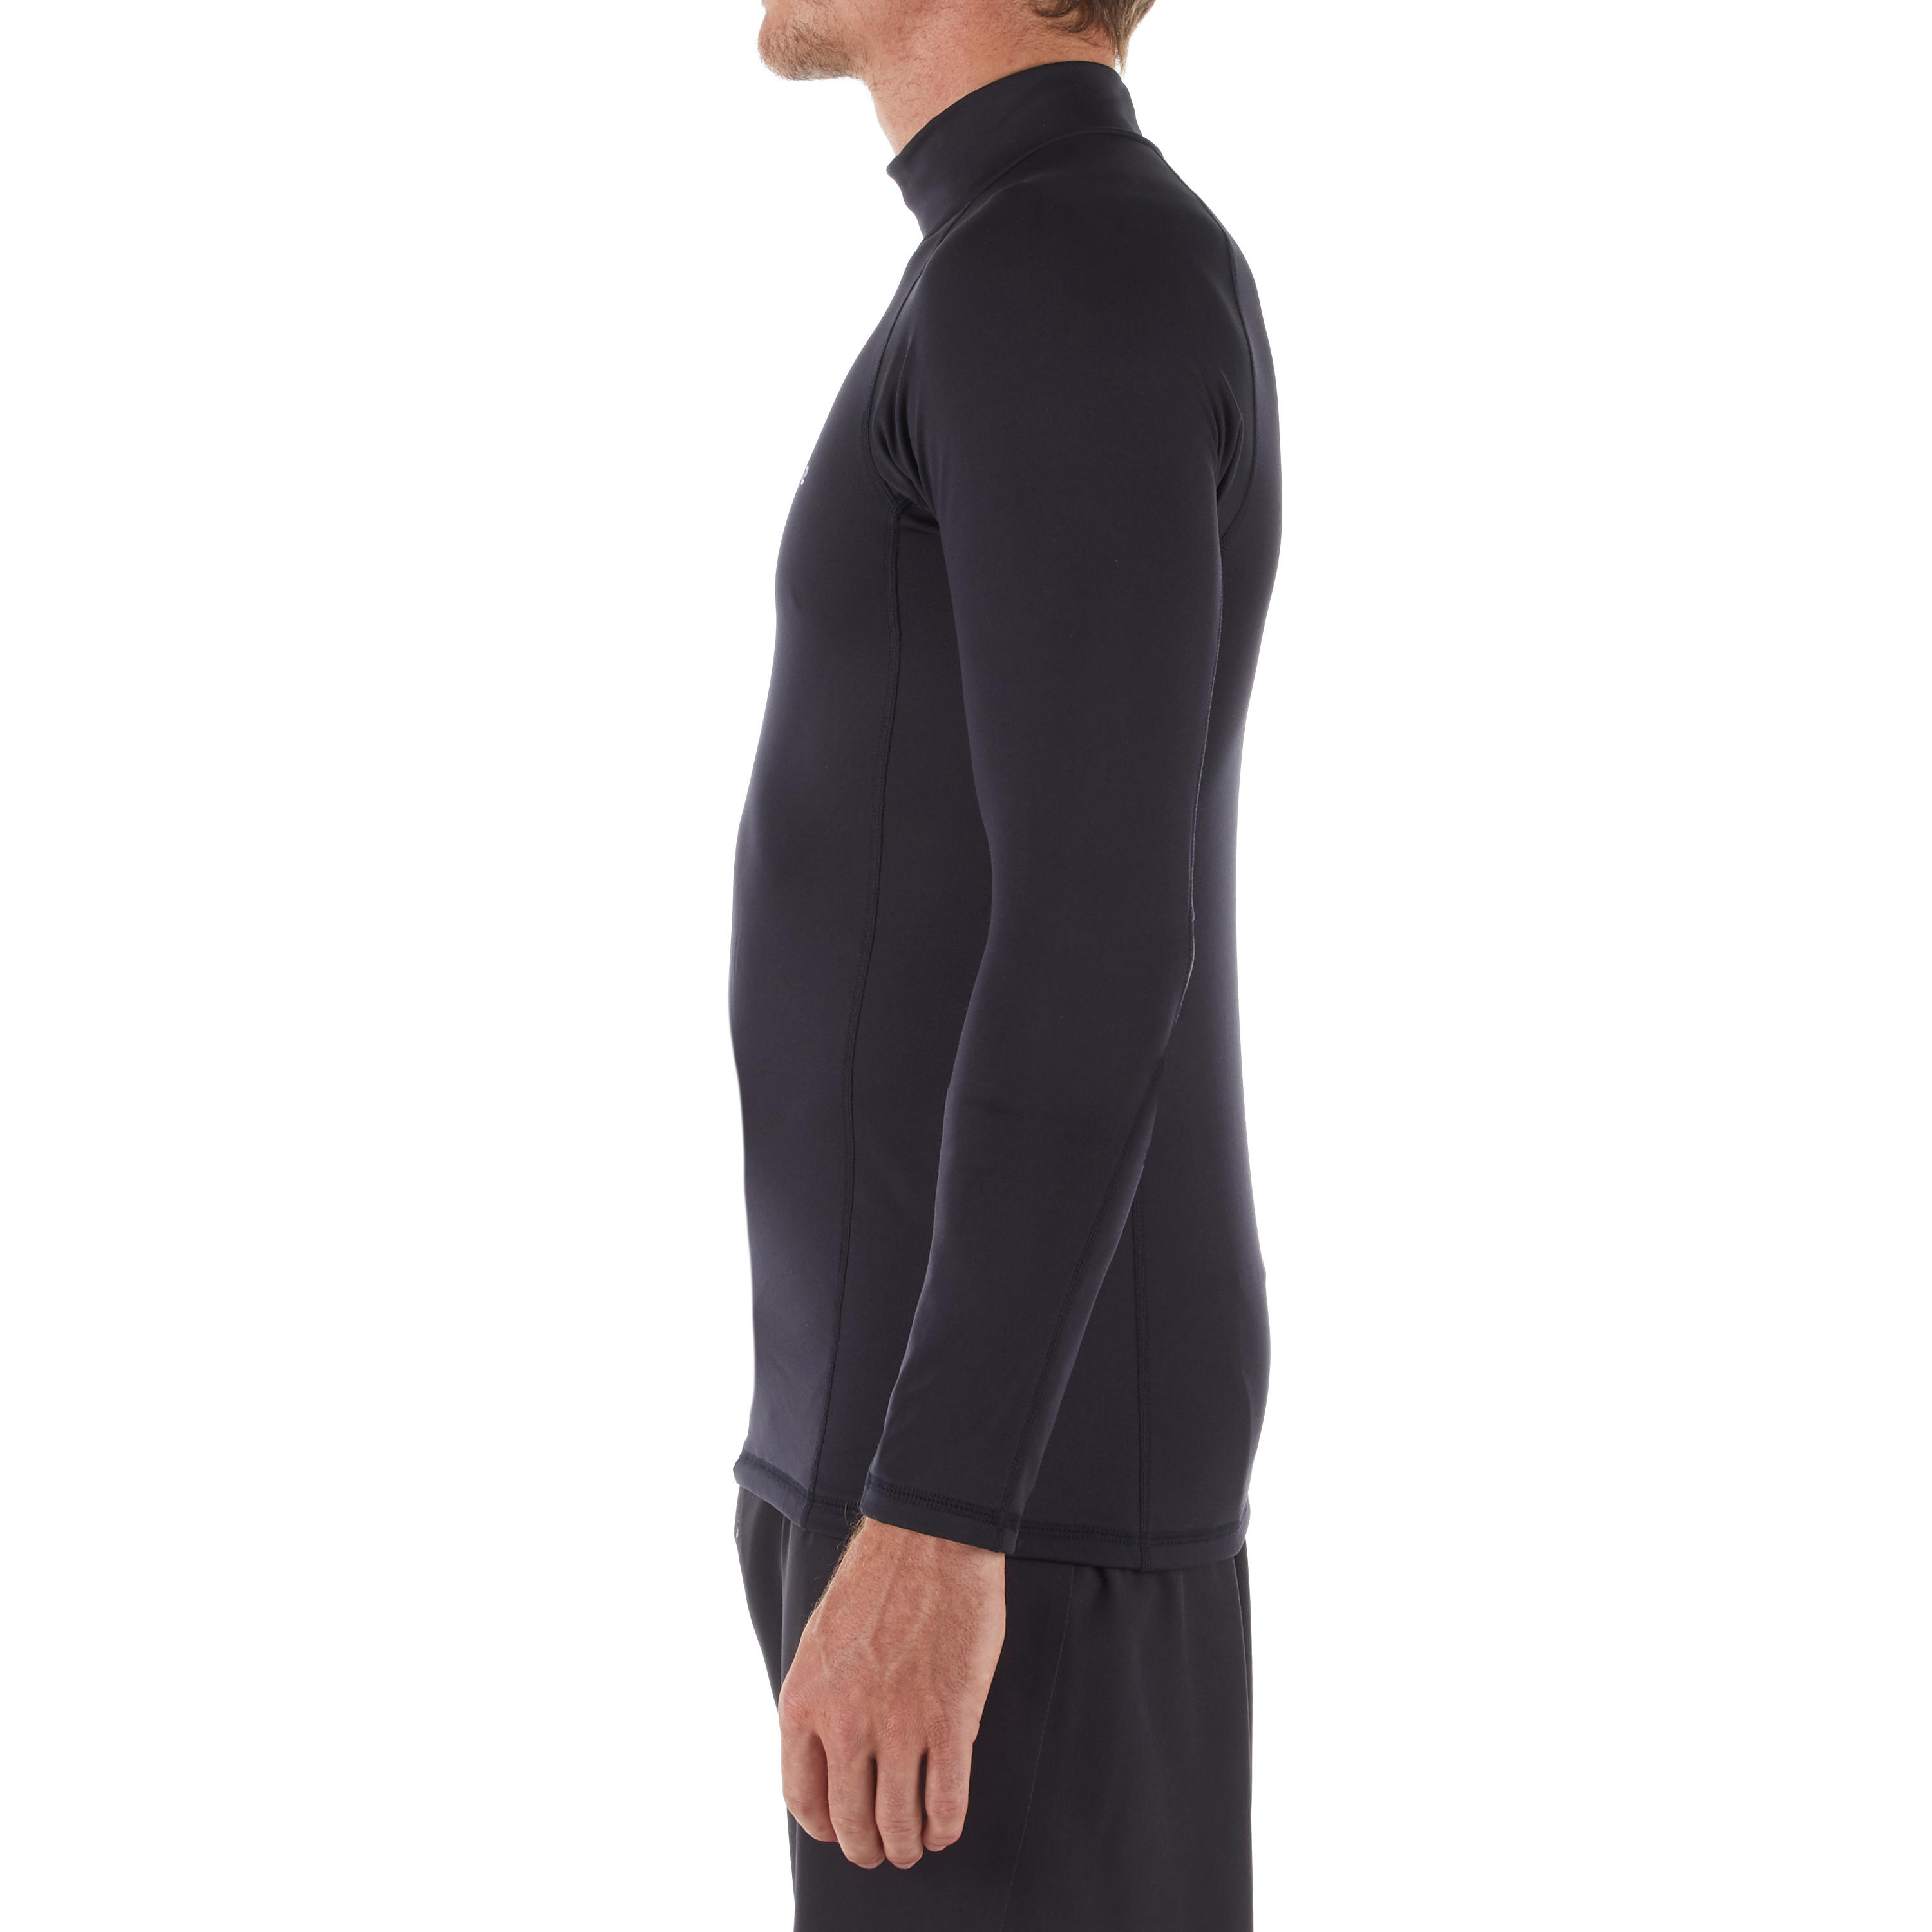 Men's surfing long-sleeve thermal fleece top T-shirt 900 - Black 2/5